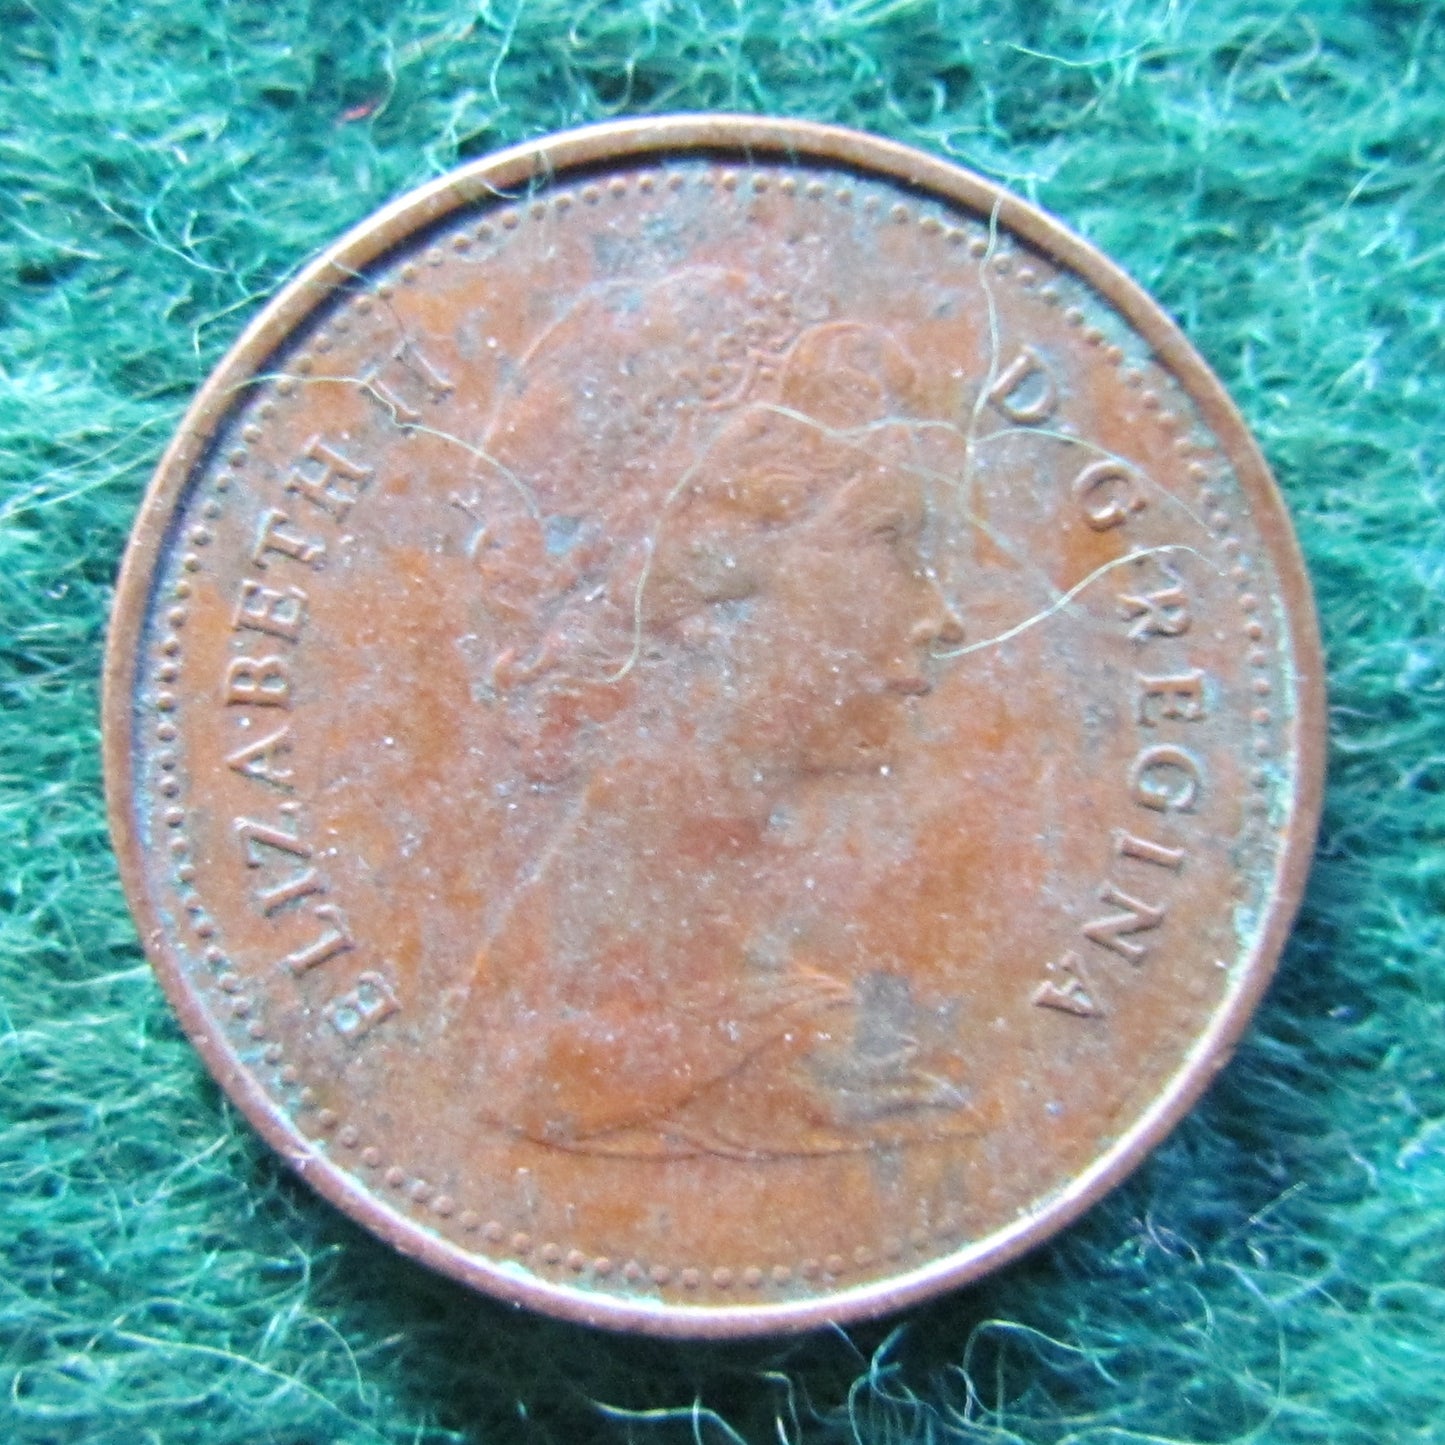 Canada 1980 1 Cent Queen Elizabeth II Coin - Circulated